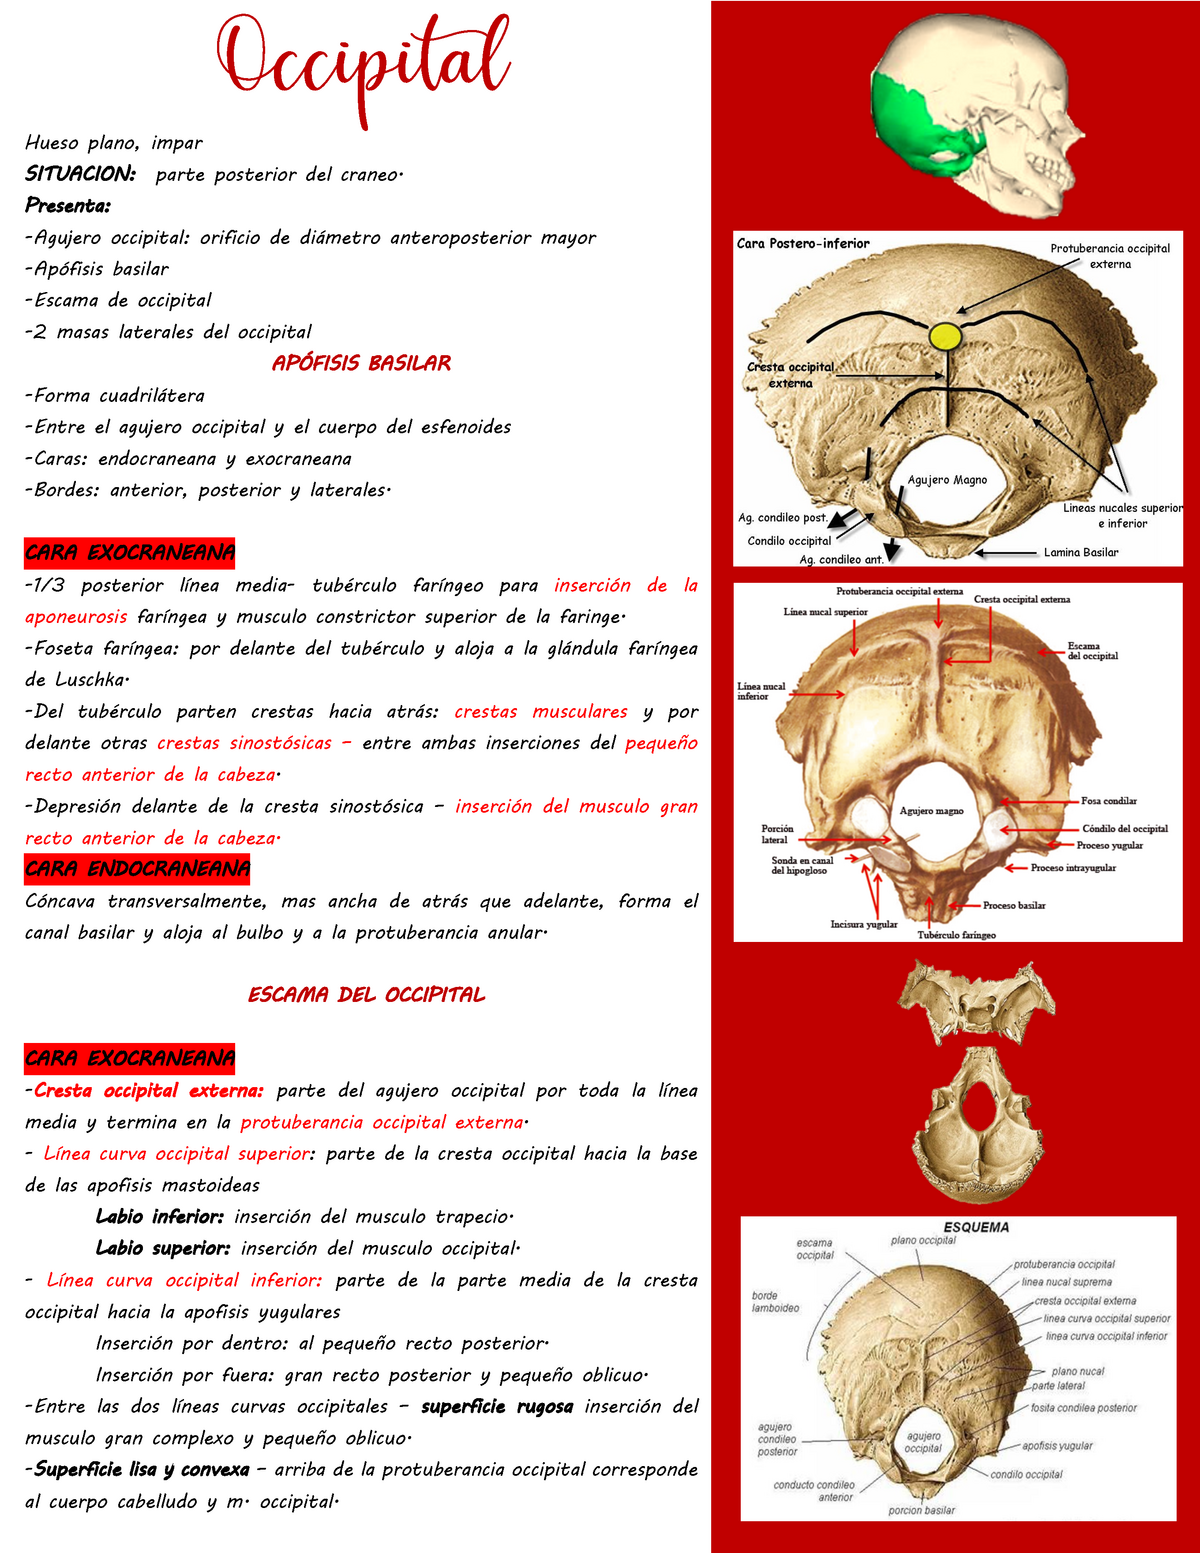 Occipitalhueso Esfenoides Anatomia Apuntes Resumen Esquema Medicina Sexiz Pix 8140